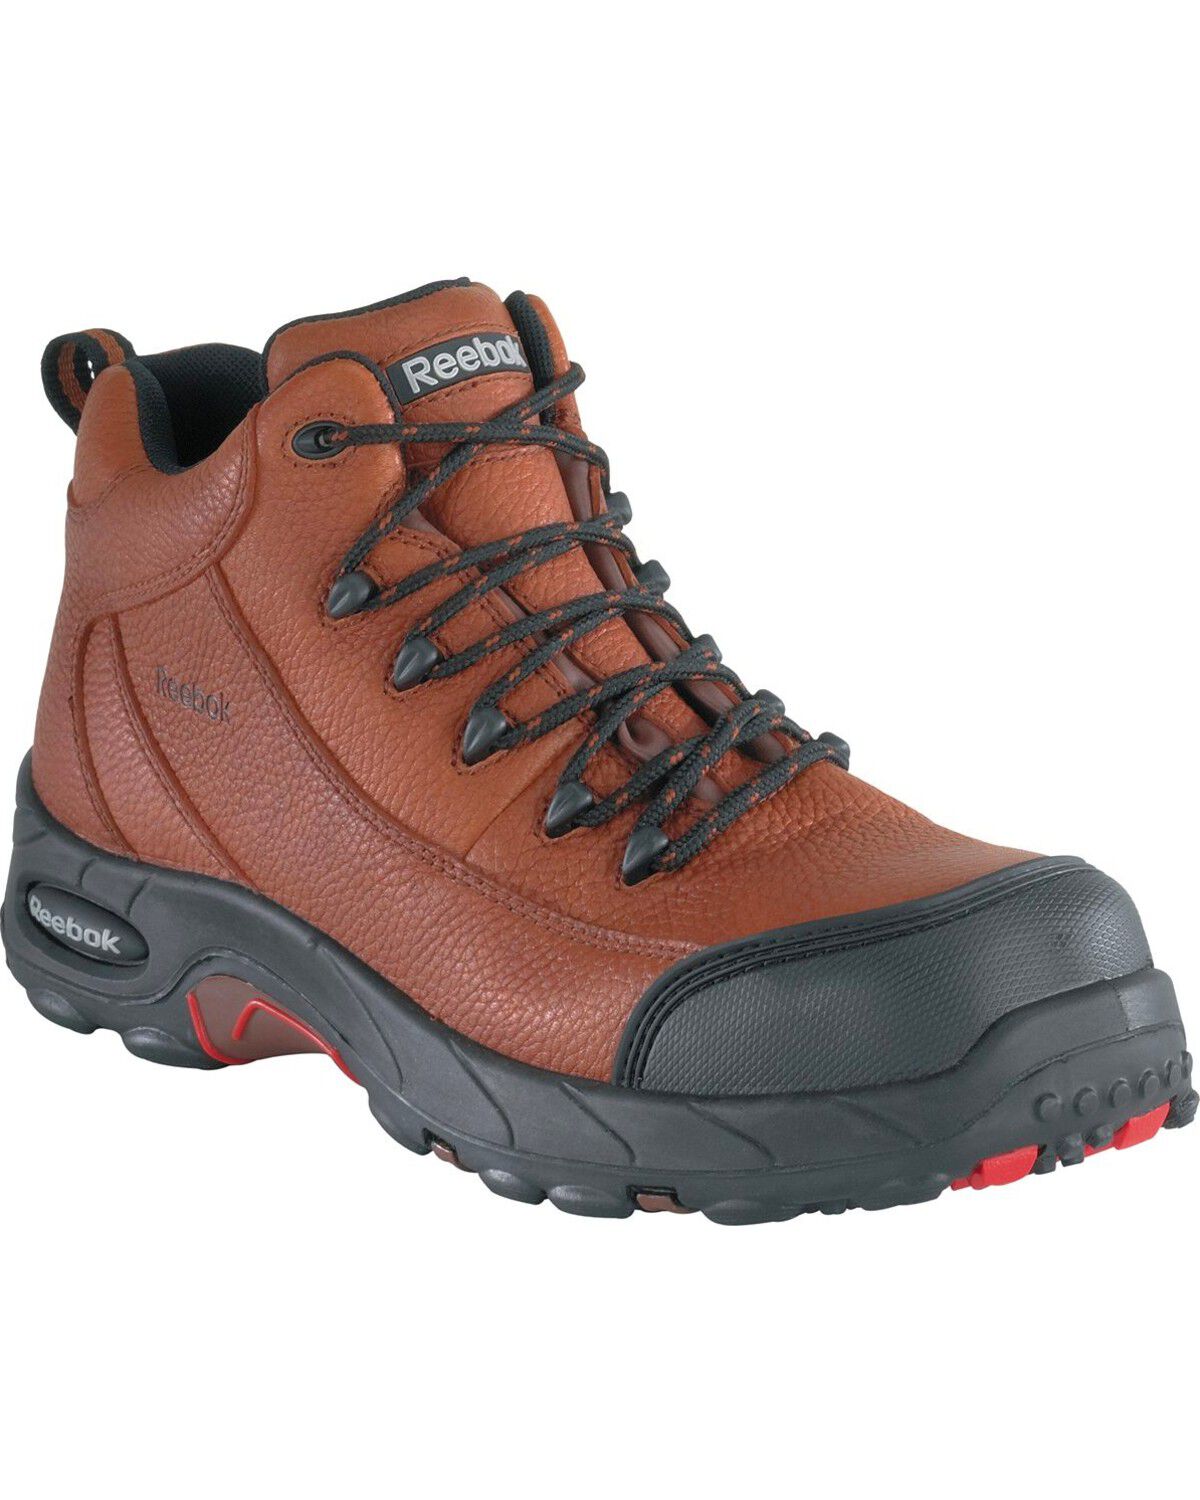 reebok women's hiking boots